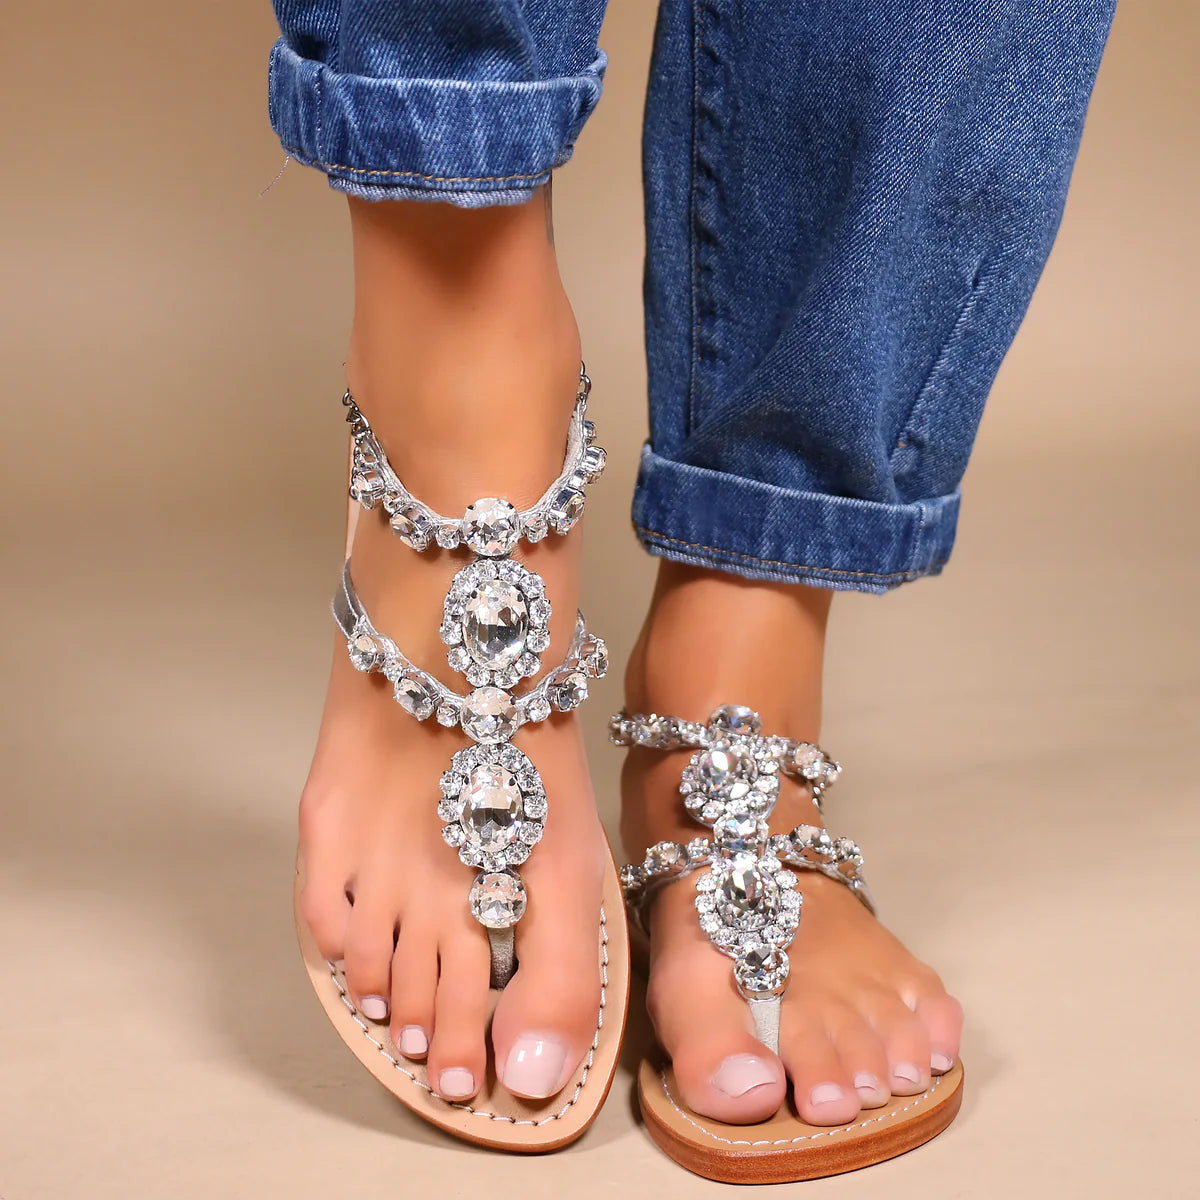 Mystique Silver/Clear Sandals.